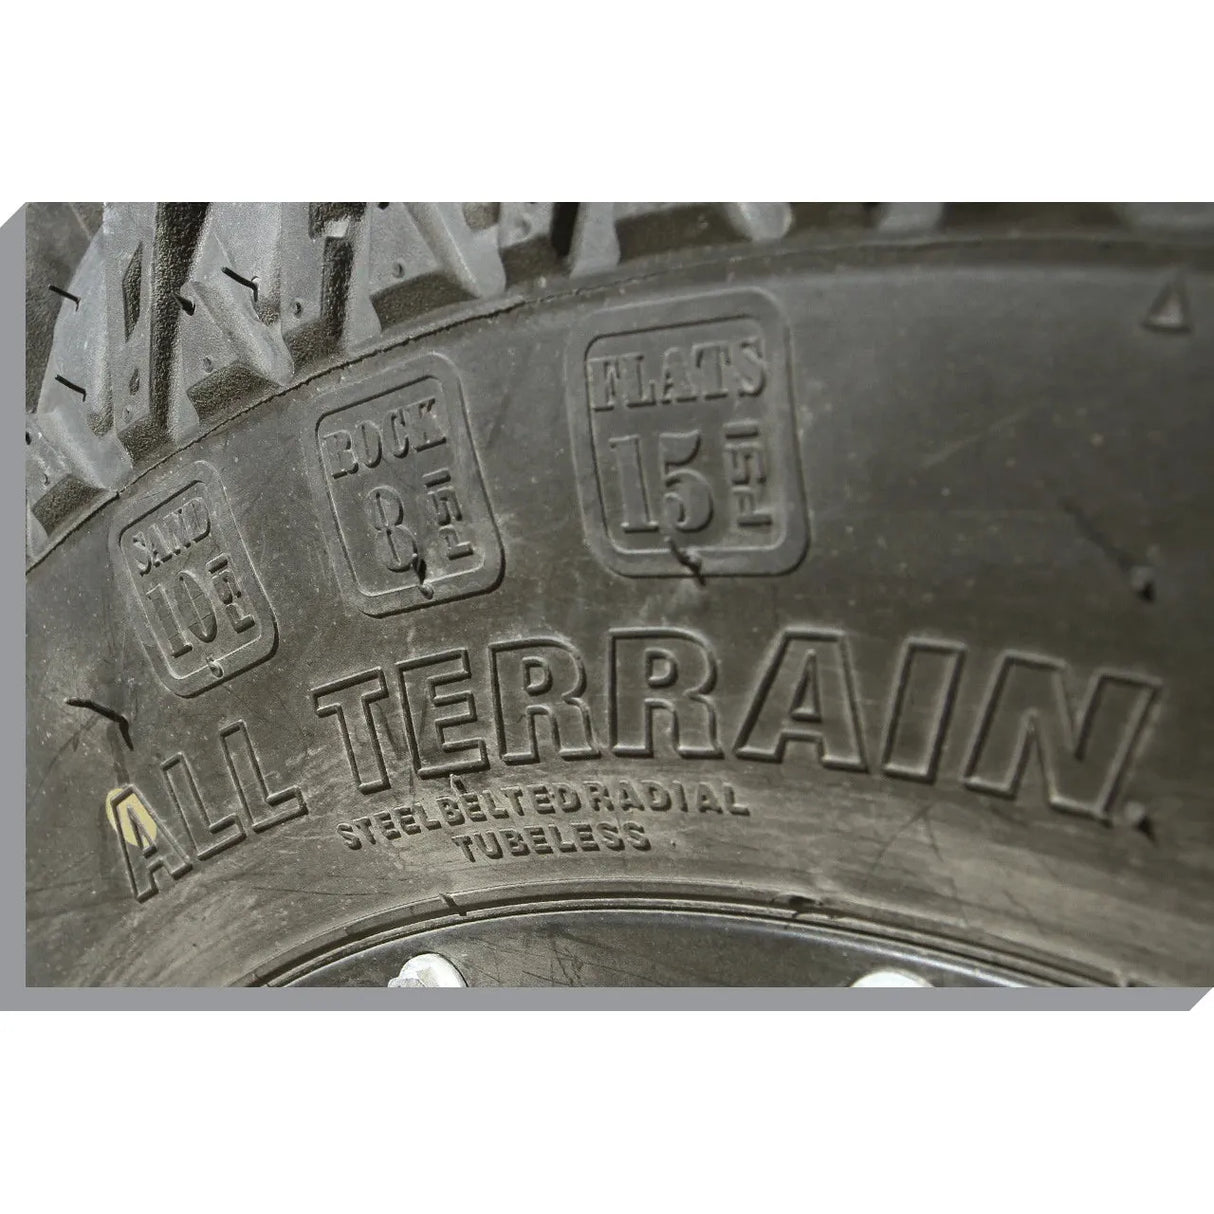 Tensor Tire Regulator All Terrain Tire - 28x10R14